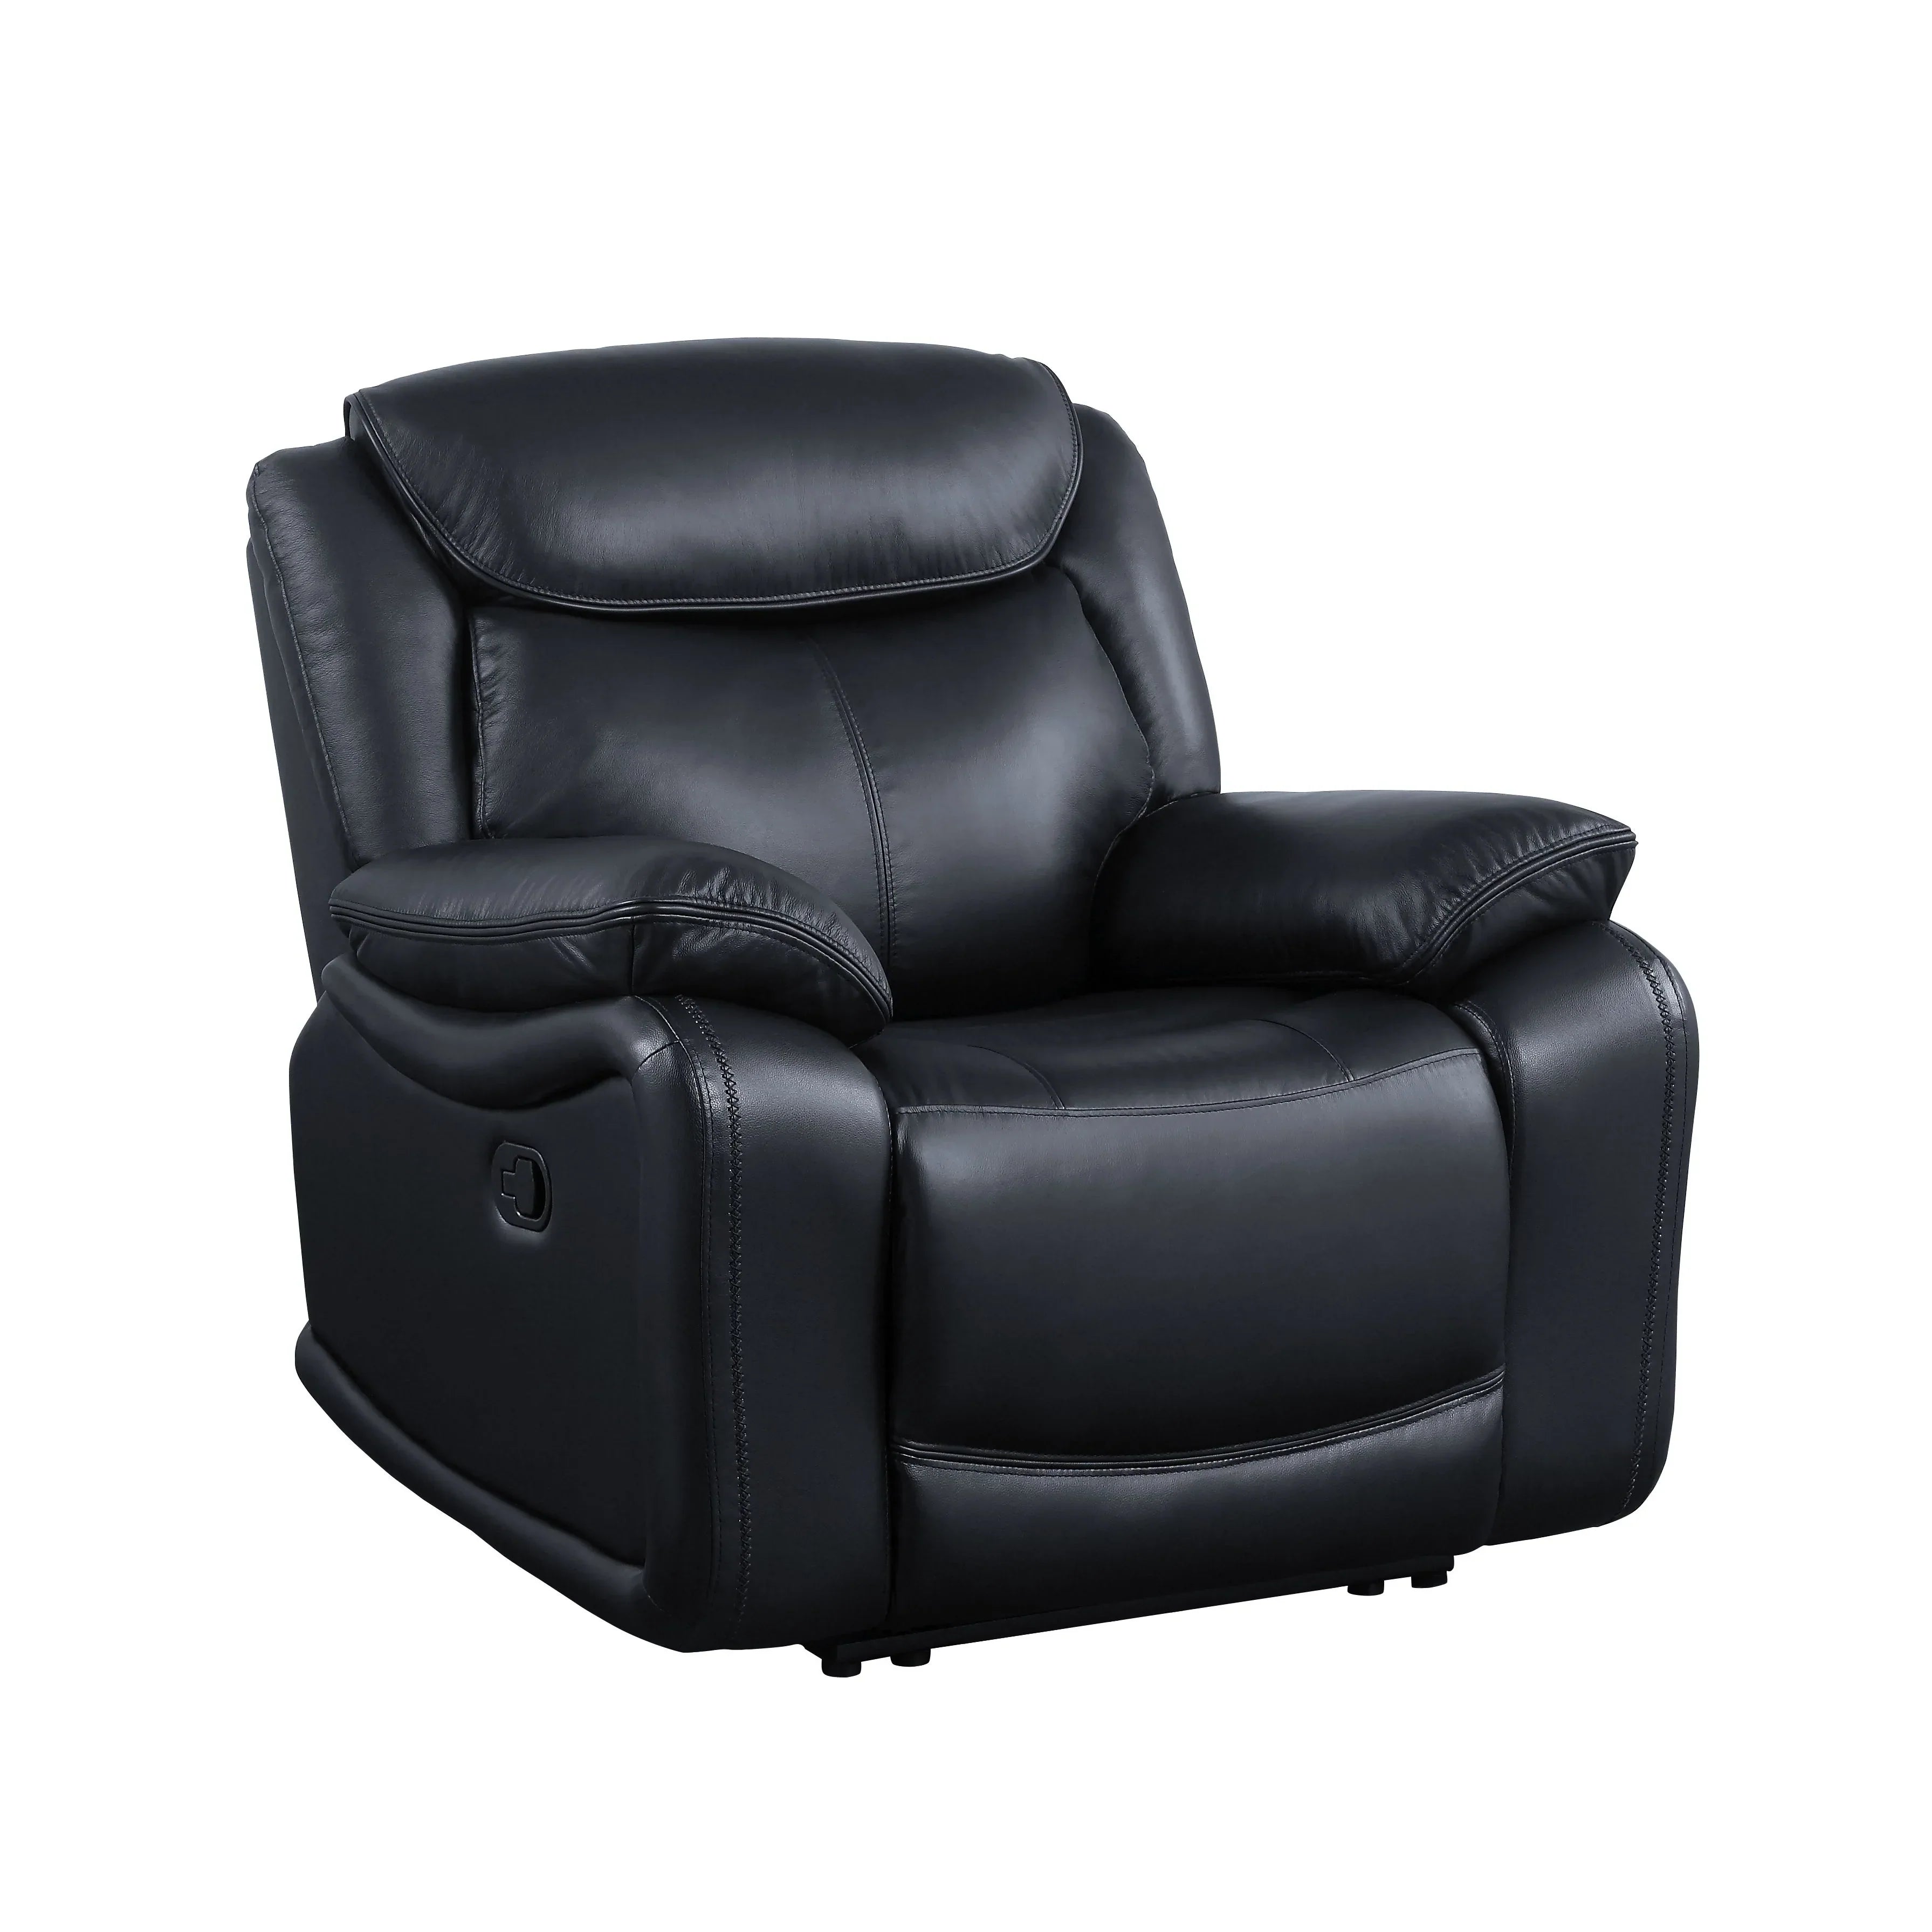 Ralorel Black Top Grain Leather Recliner Model LV00062 By ACME Furniture